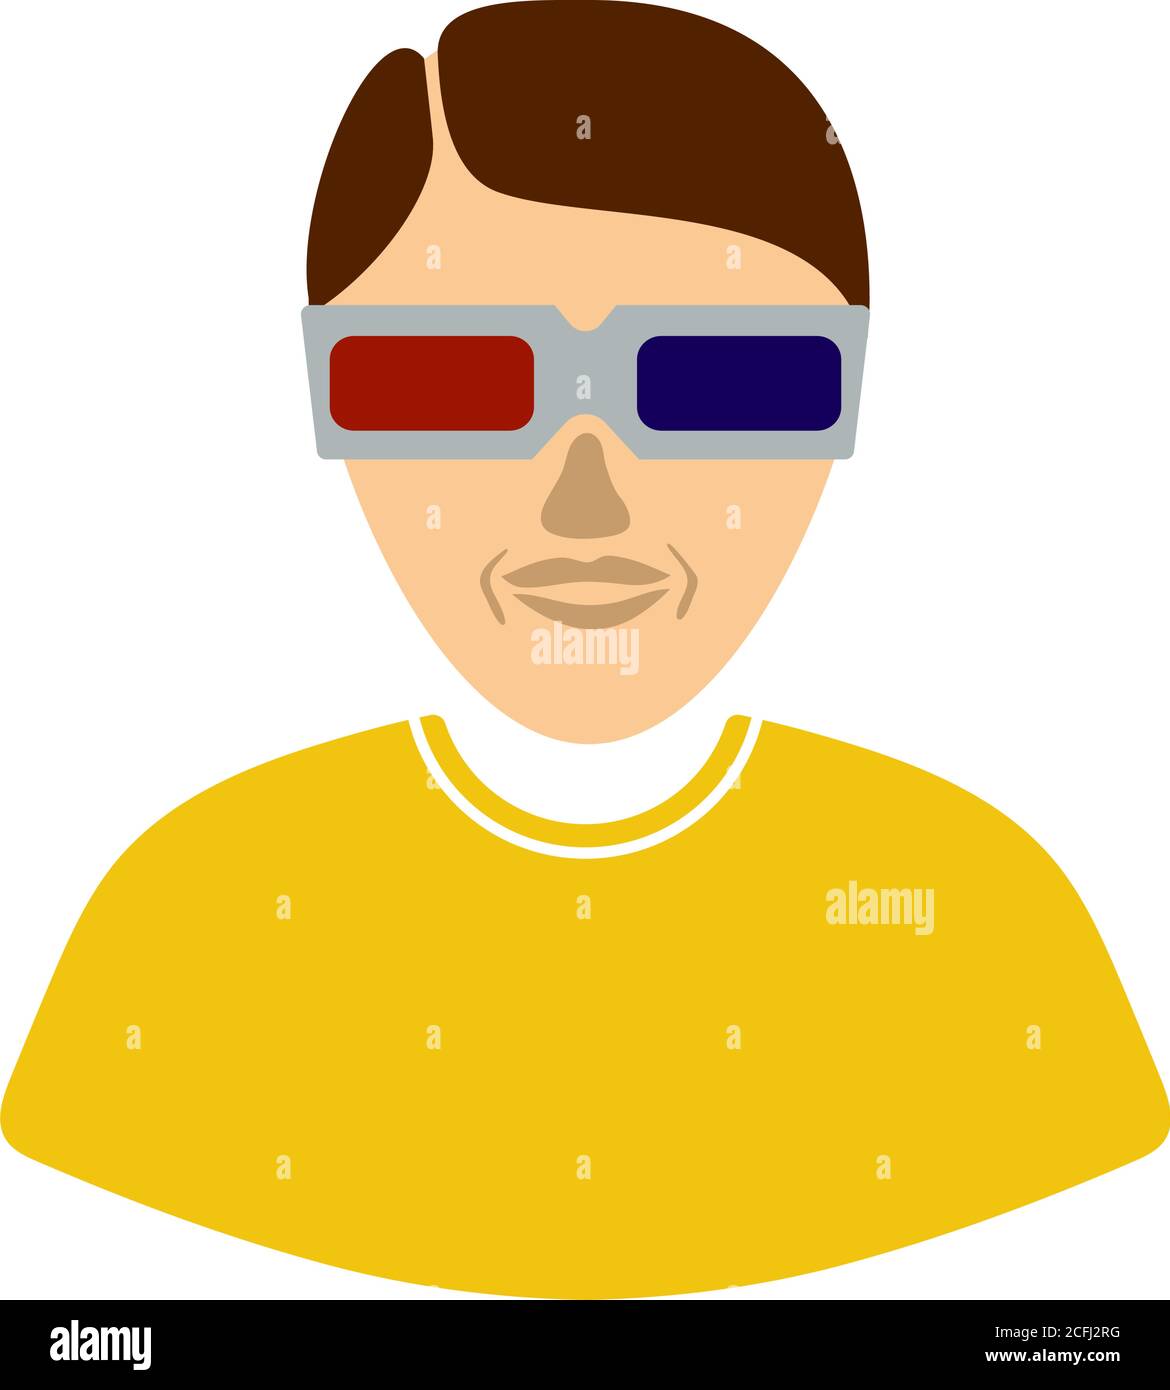 Mann mit 3d-Brille Symbol. Flaches Farbdesign. Vektorgrafik. Stock Vektor